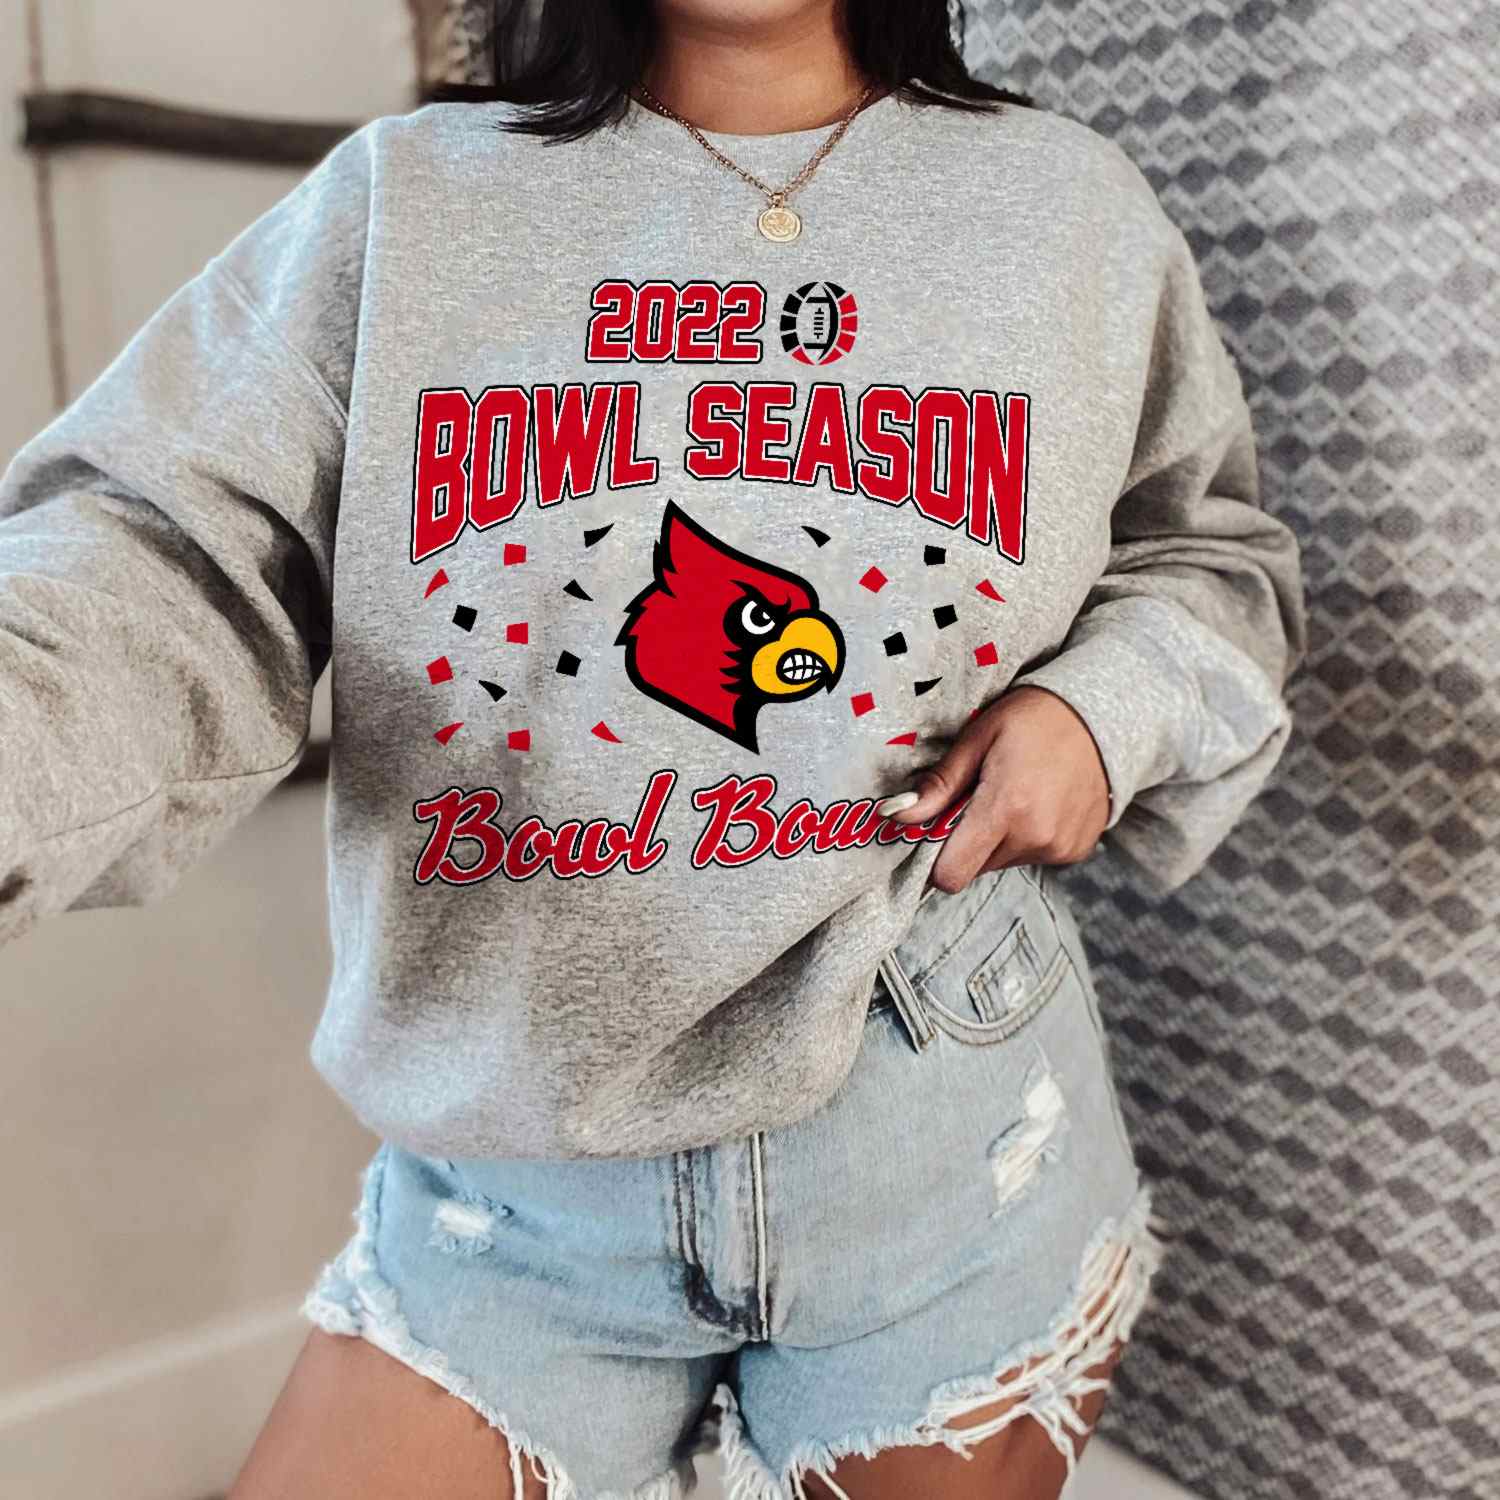 Louisville Cardinals Sweatshirt University Football Fan Shirt